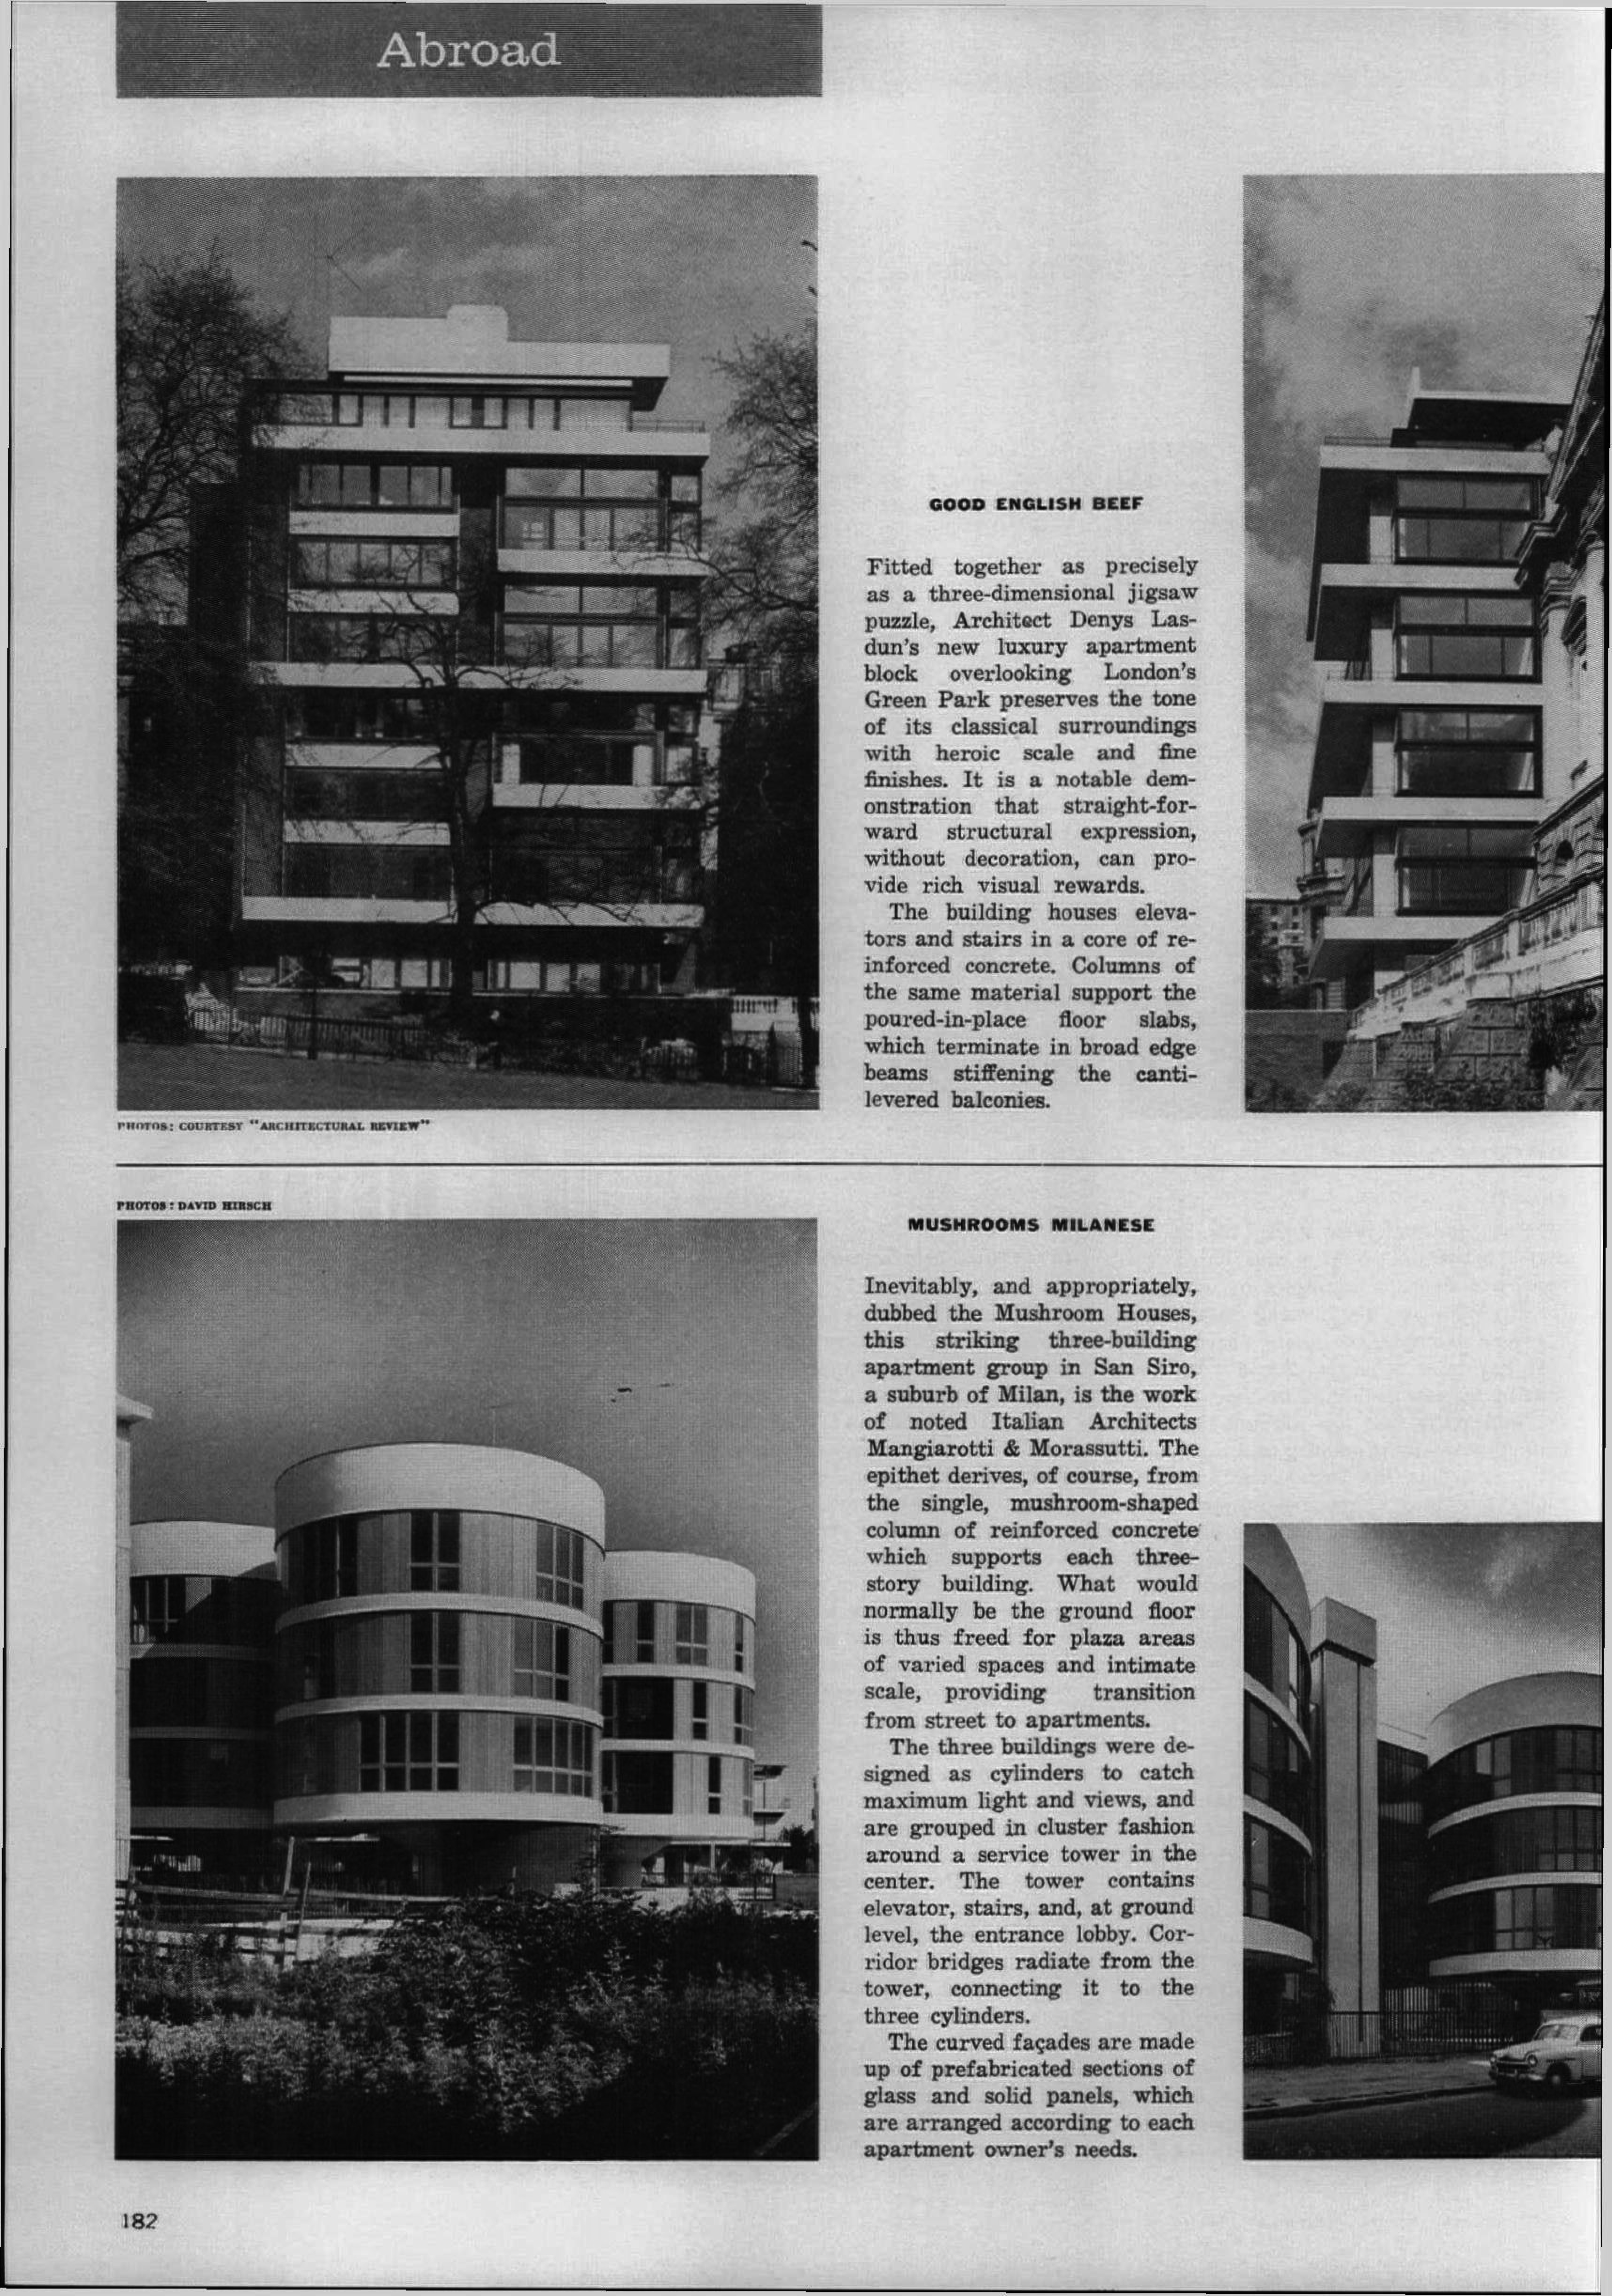 1961. “Mushroom Milanese”, Architectural Forum, 115, no. 5 (November): 182.